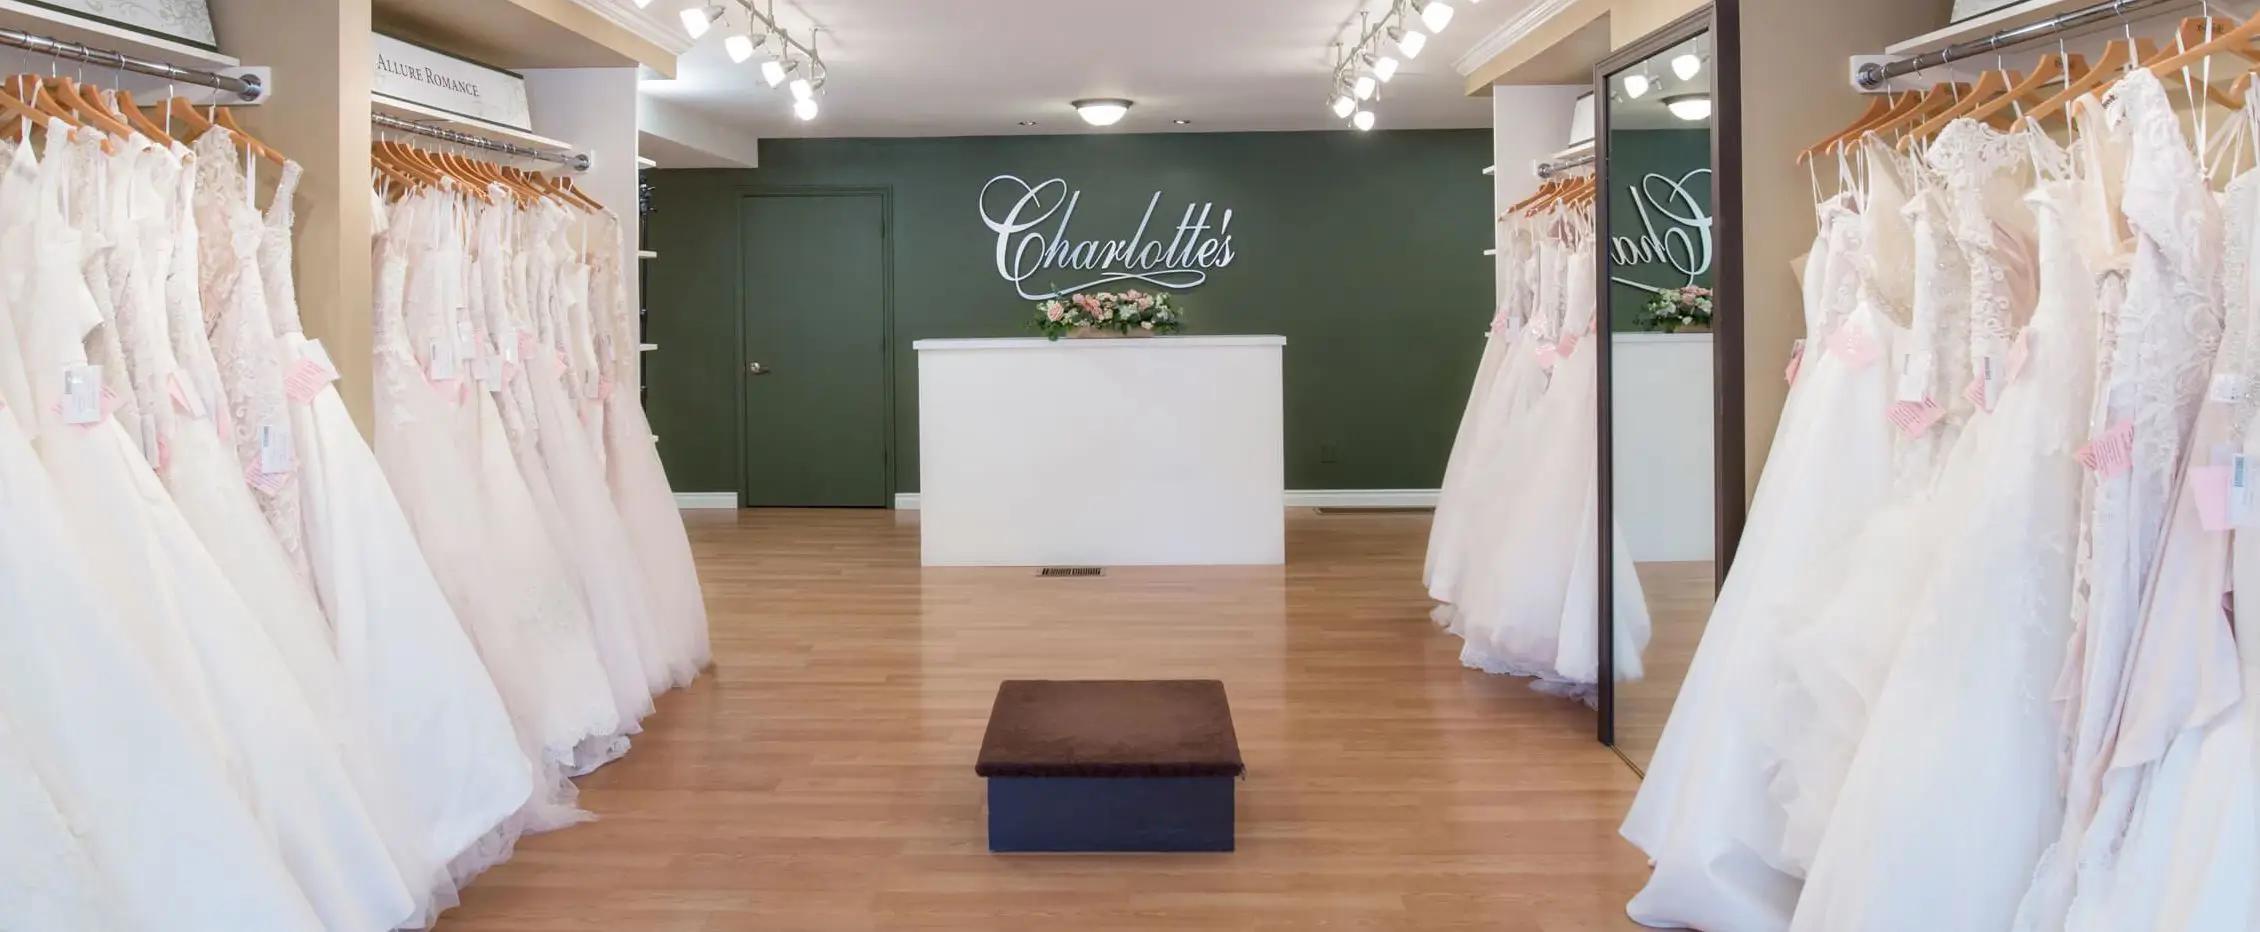 Charlotte Weddings Ashland Store